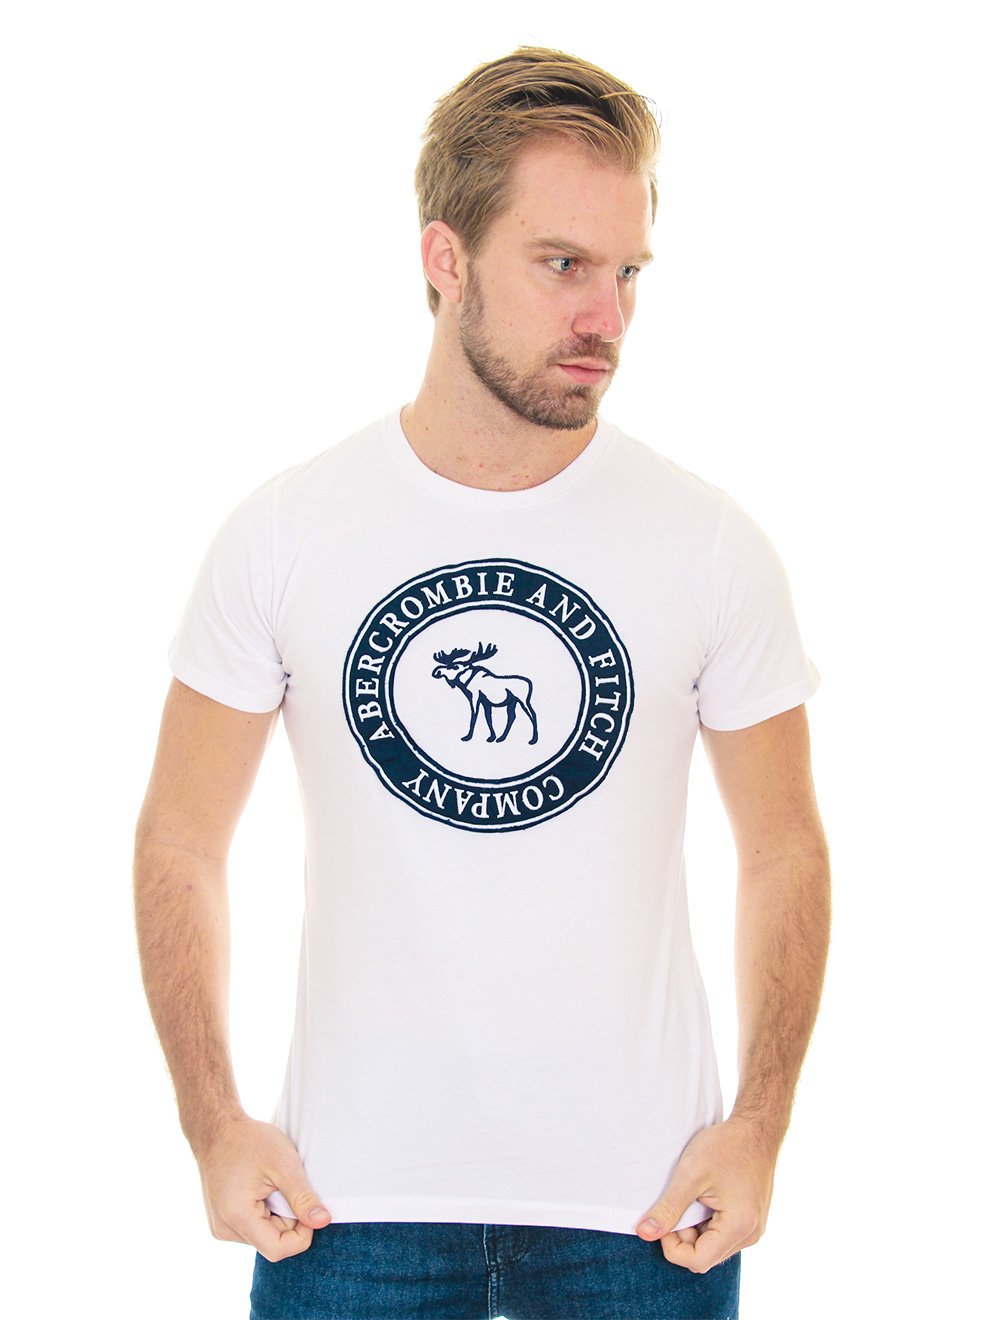 Camiseta Abercrombie Masculina Moose Circle Company Branca